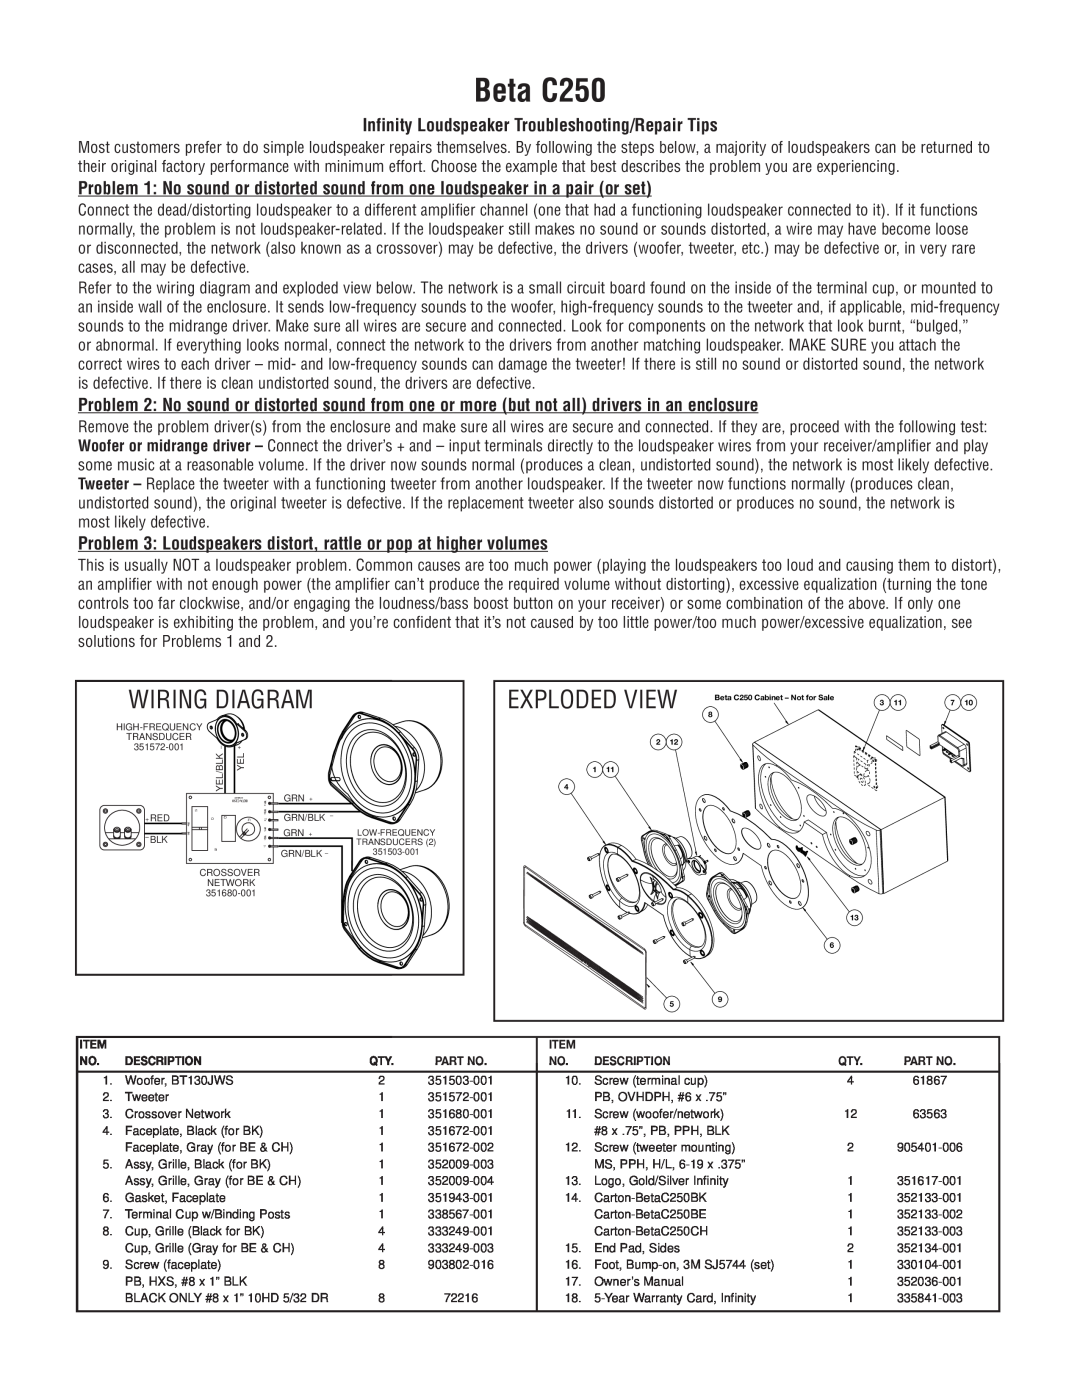 Infiniti Beta C250 owner manual Wiring Diagram, Exploded View 